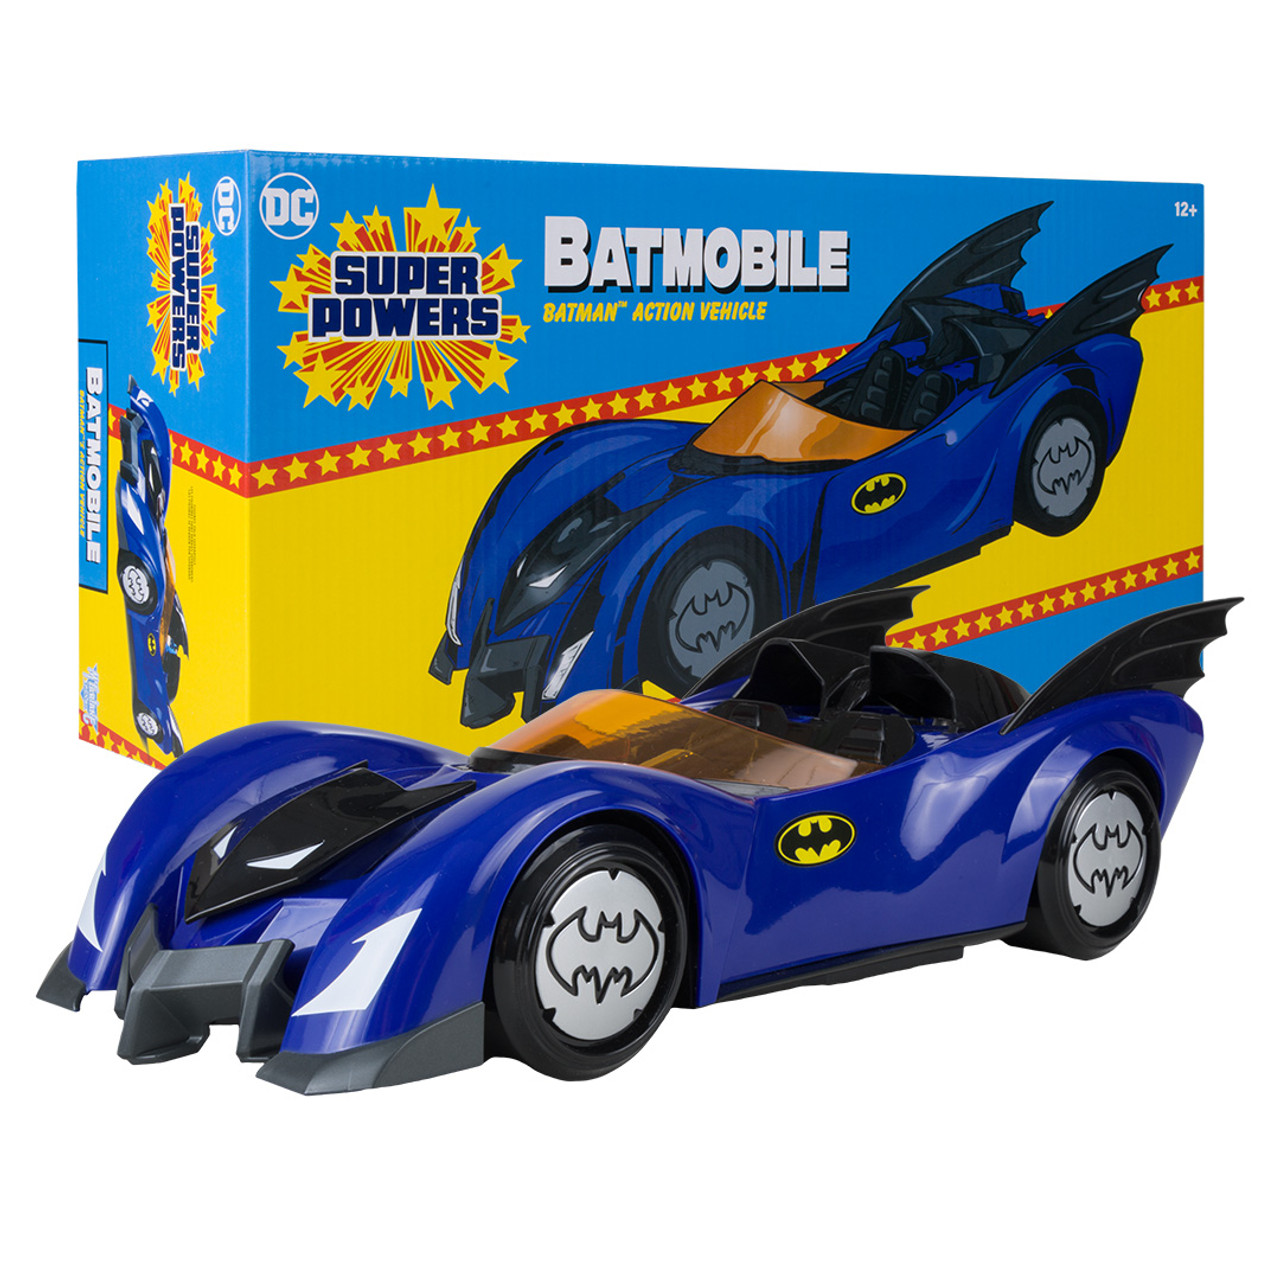 The Batmobile (DC Super Powers) Vehicle